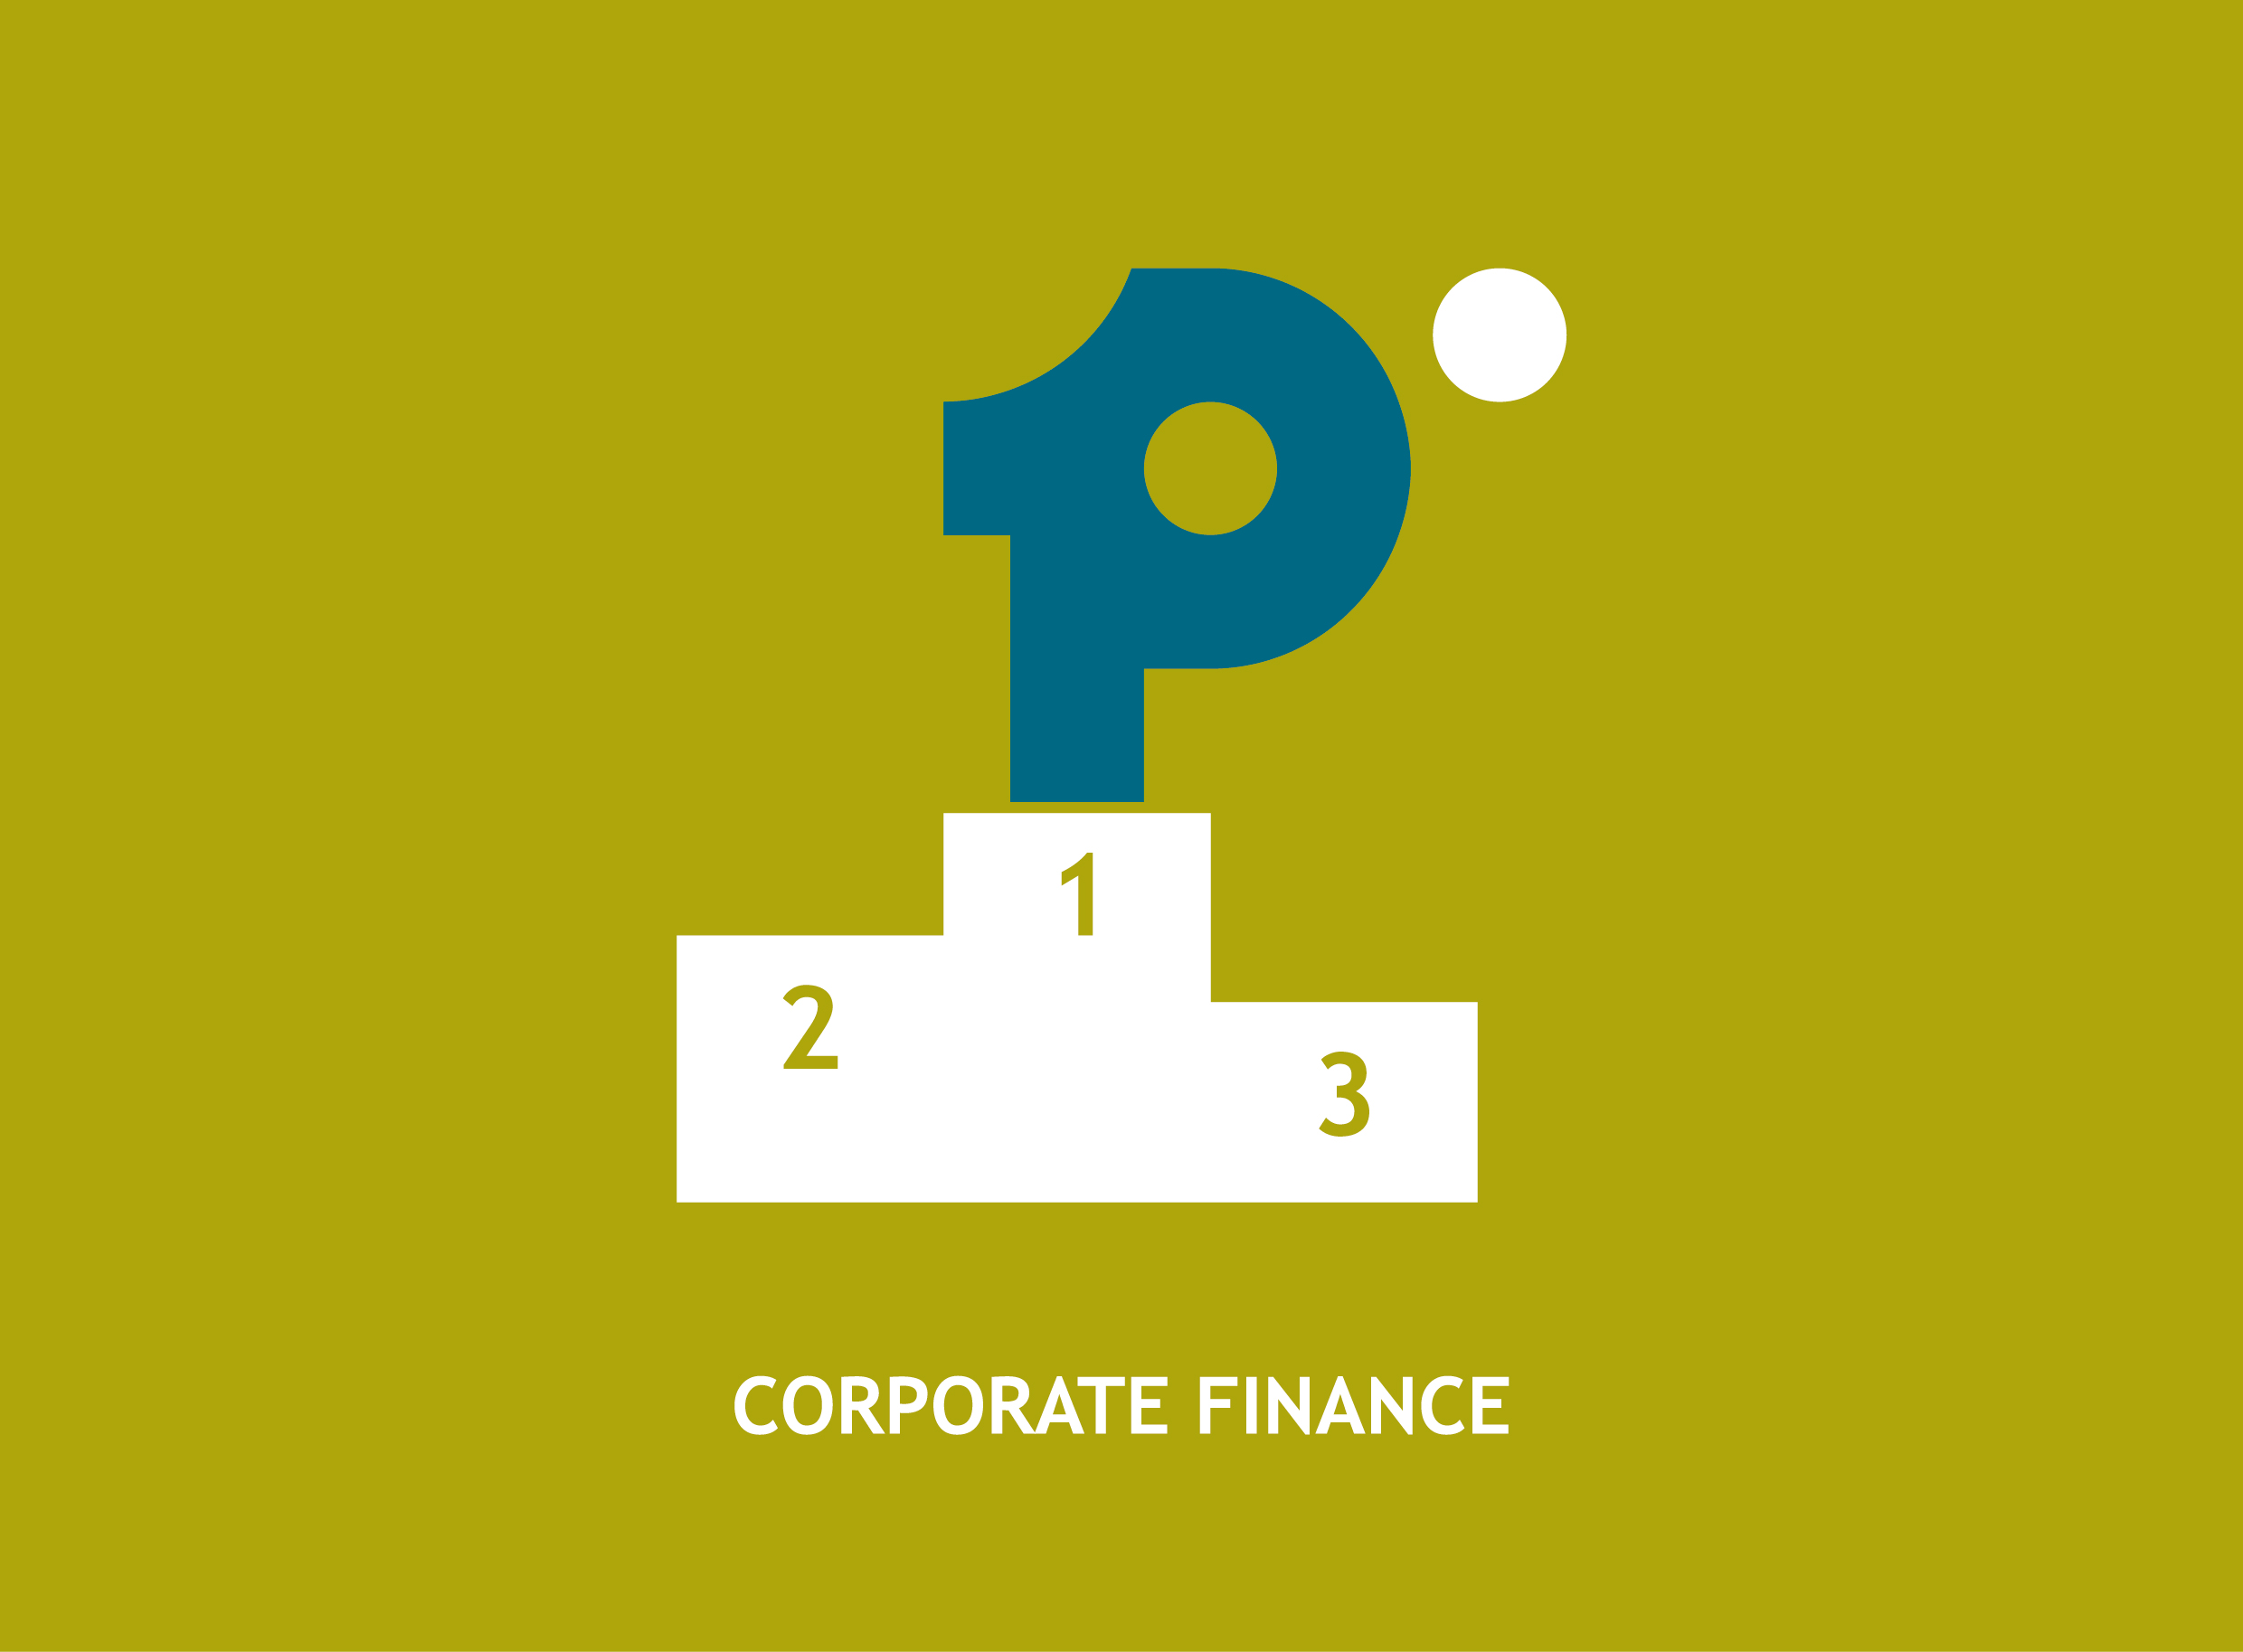 Corporate Finance - Premier Corporate